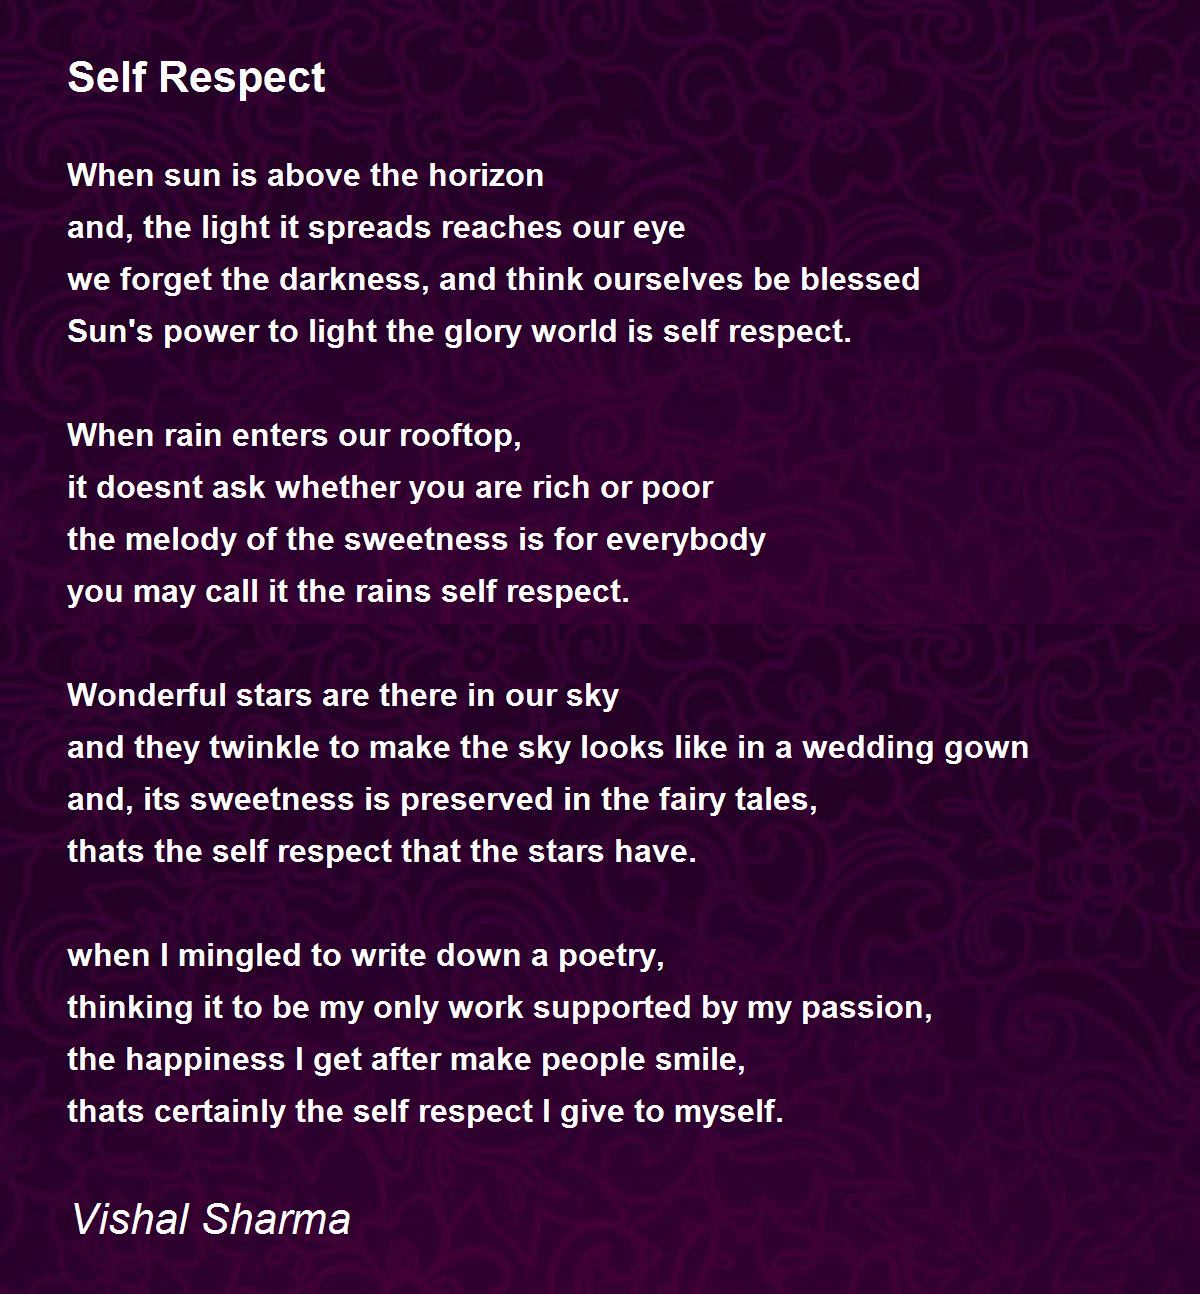 Self Respect - Self Respect Poem by Vishal Sharma